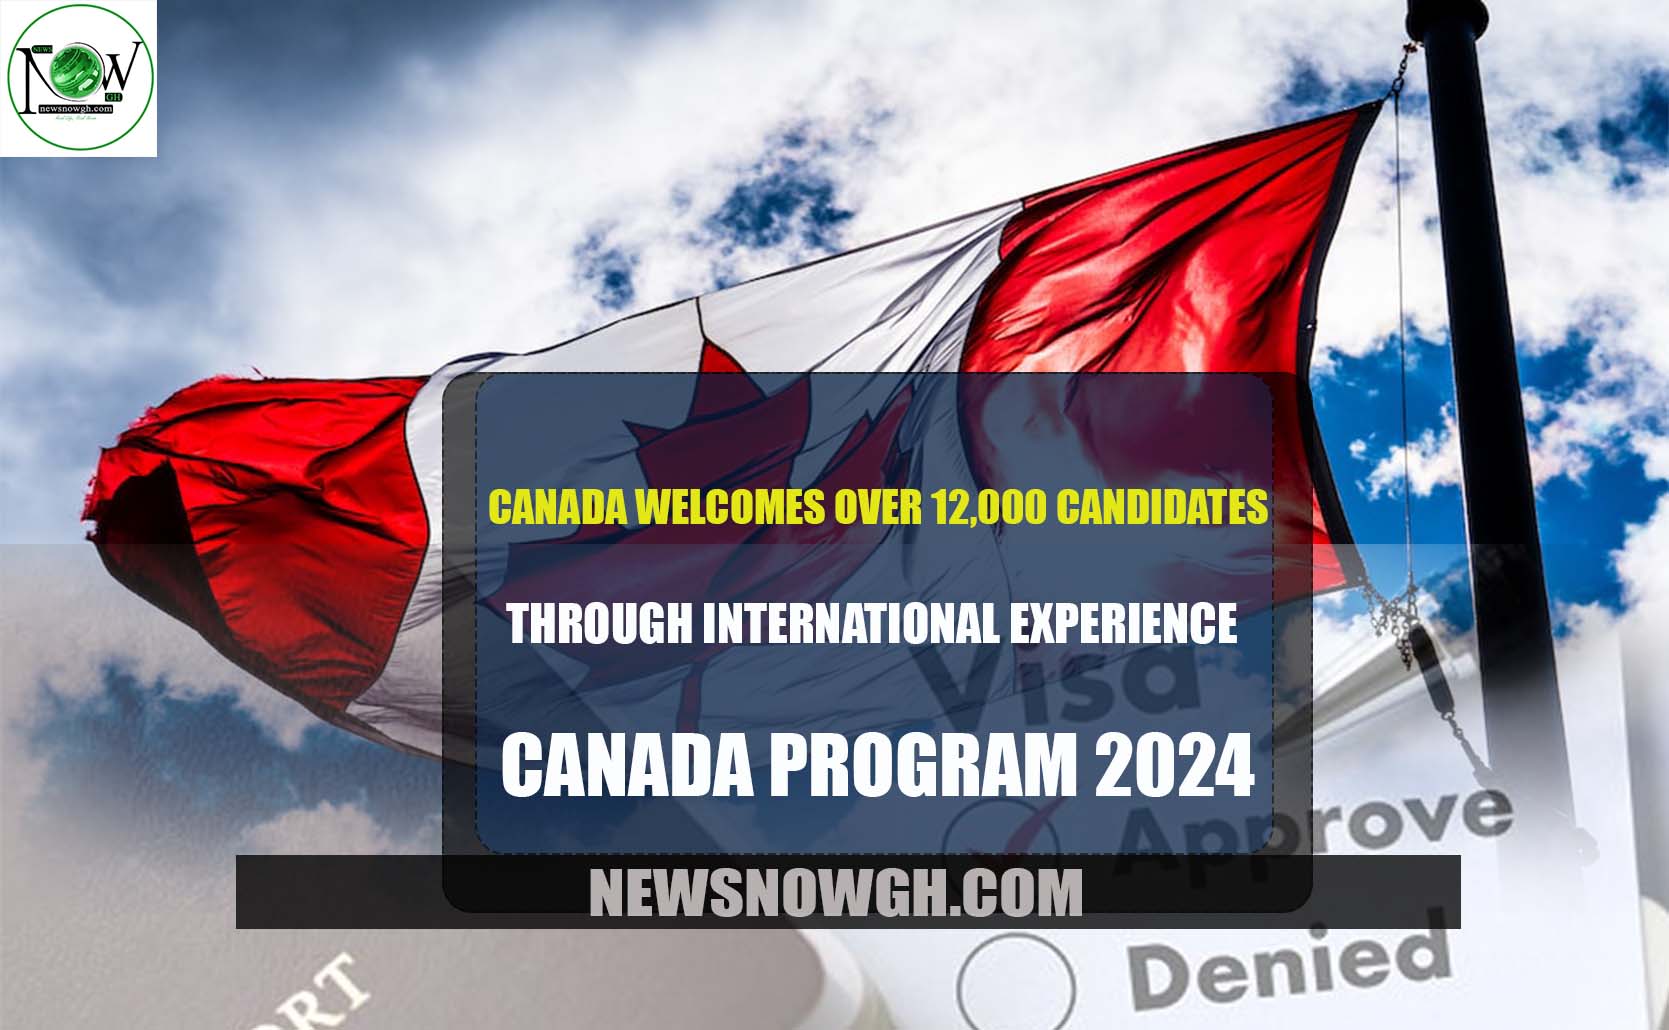 Canada Program 2024 